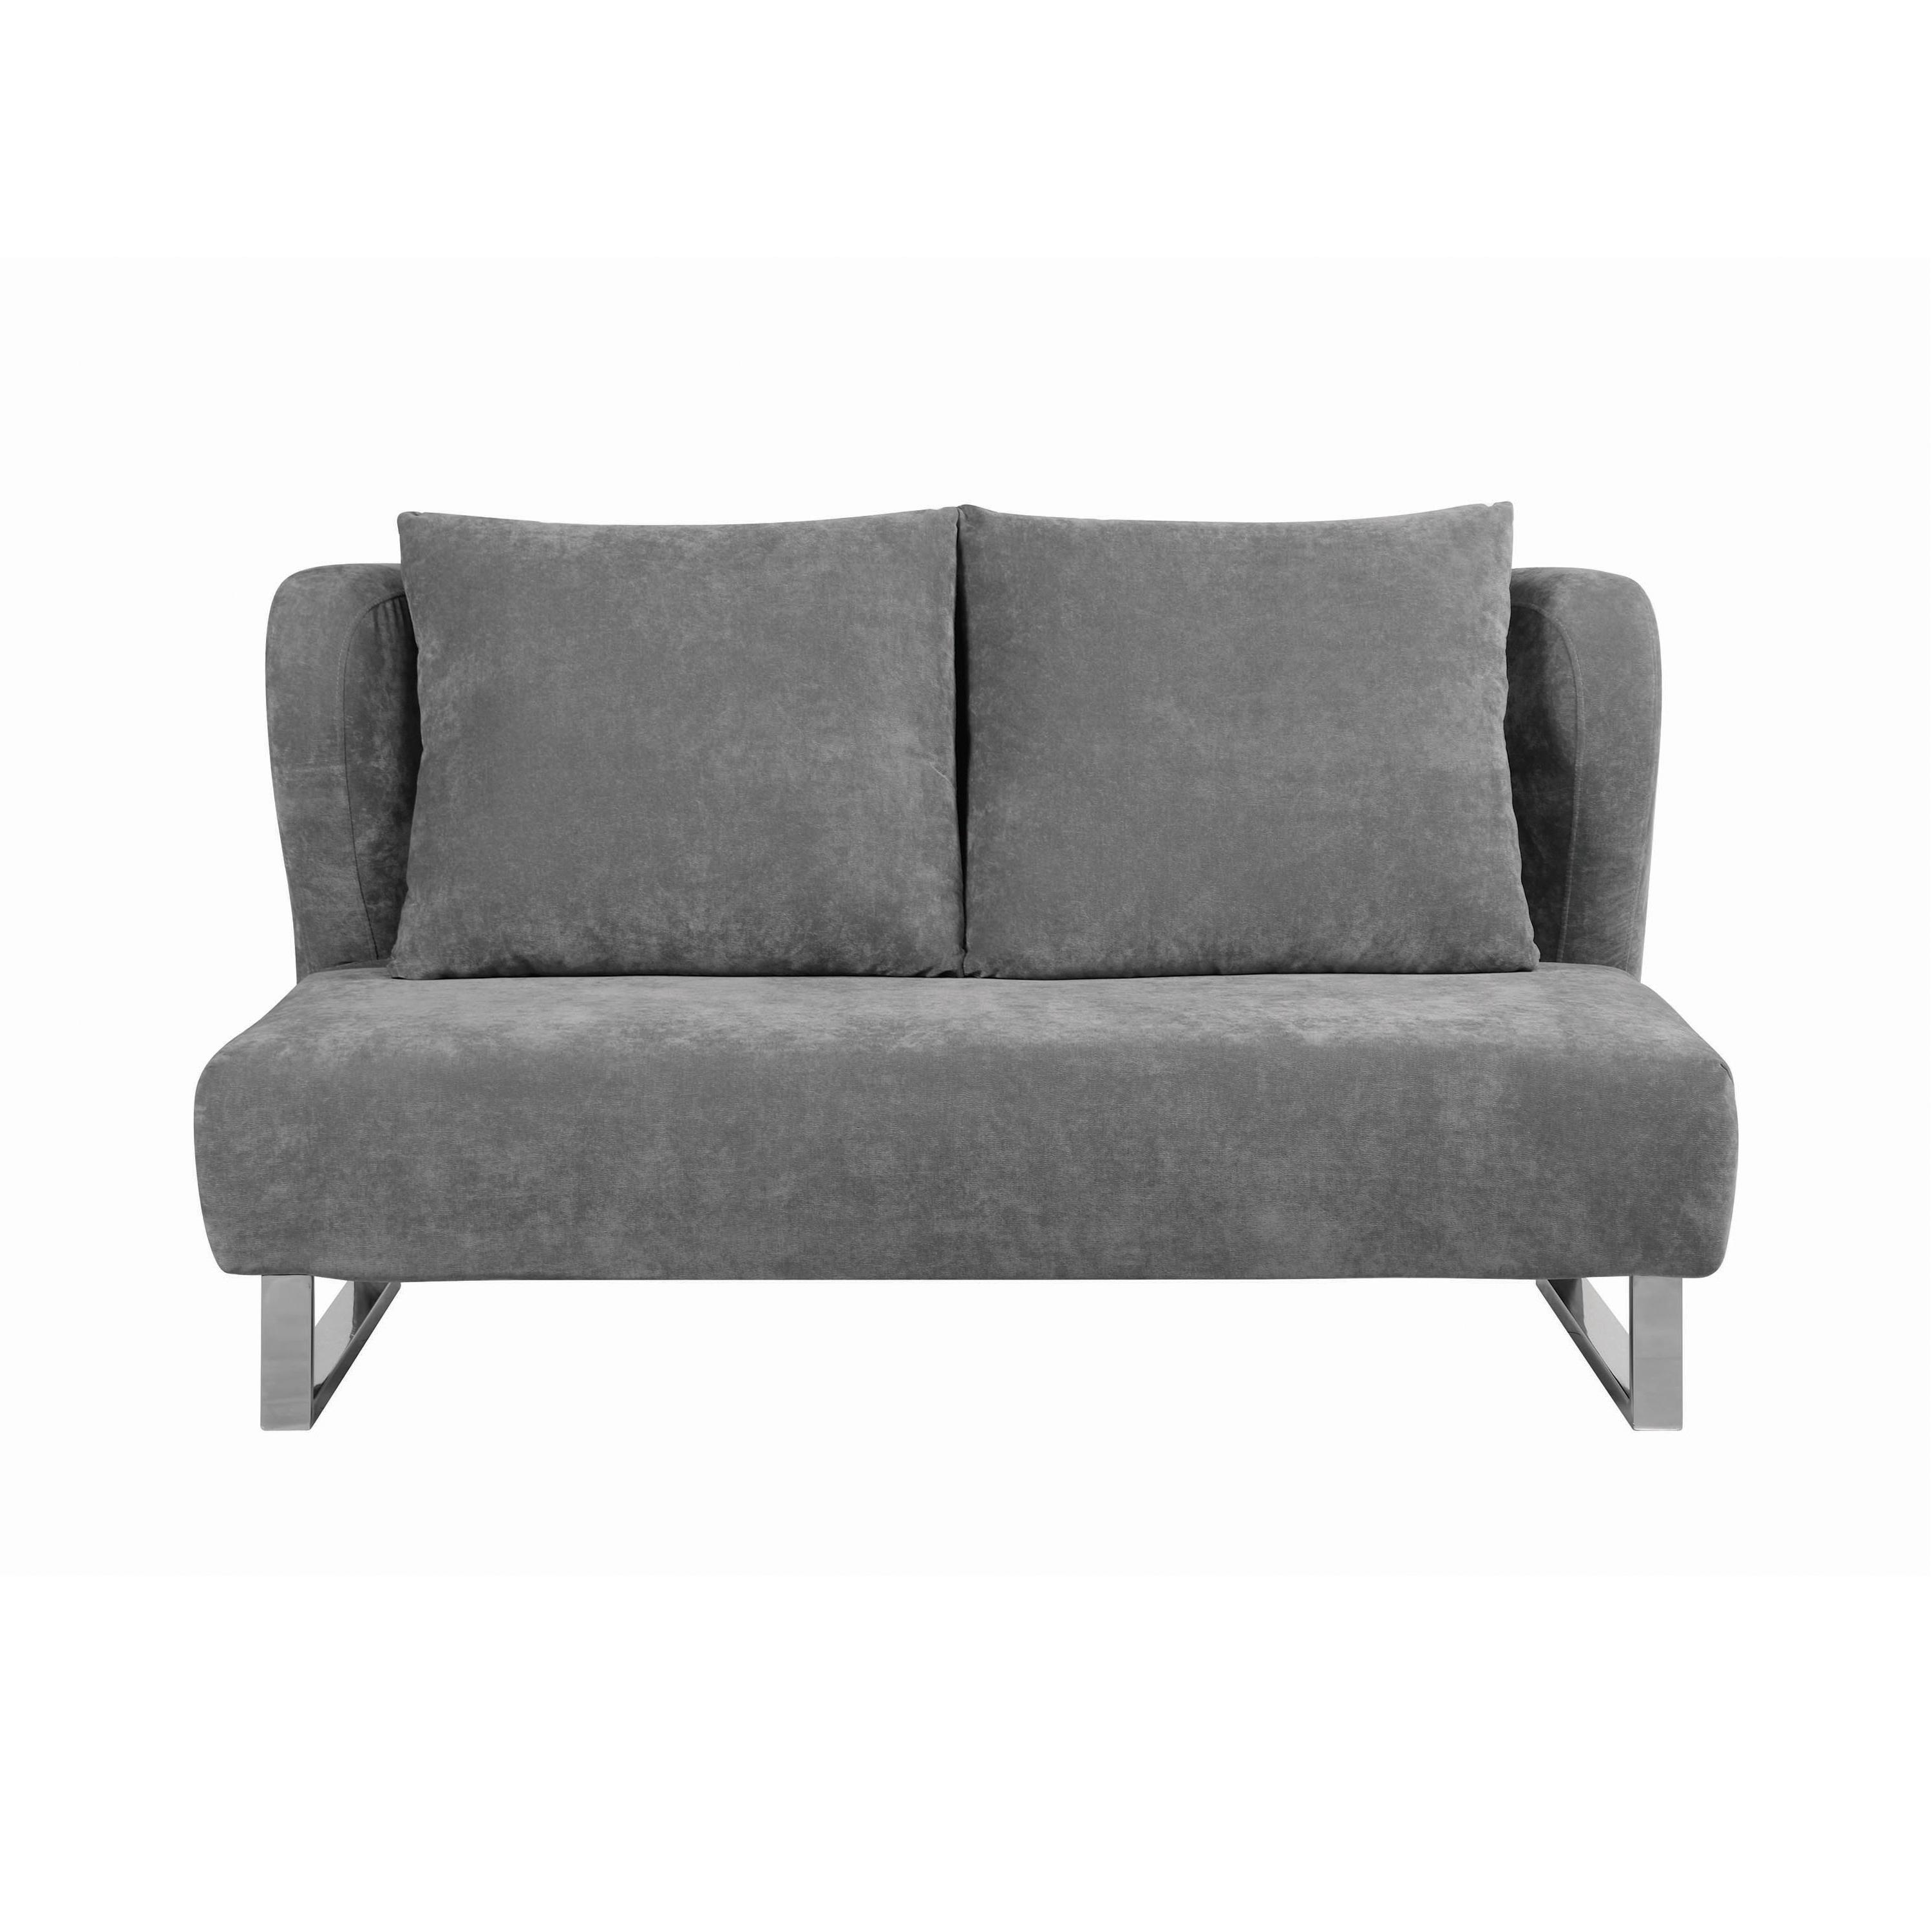 Contemporary Sofa bed 551074 Vera 551074 in Gray Velvet